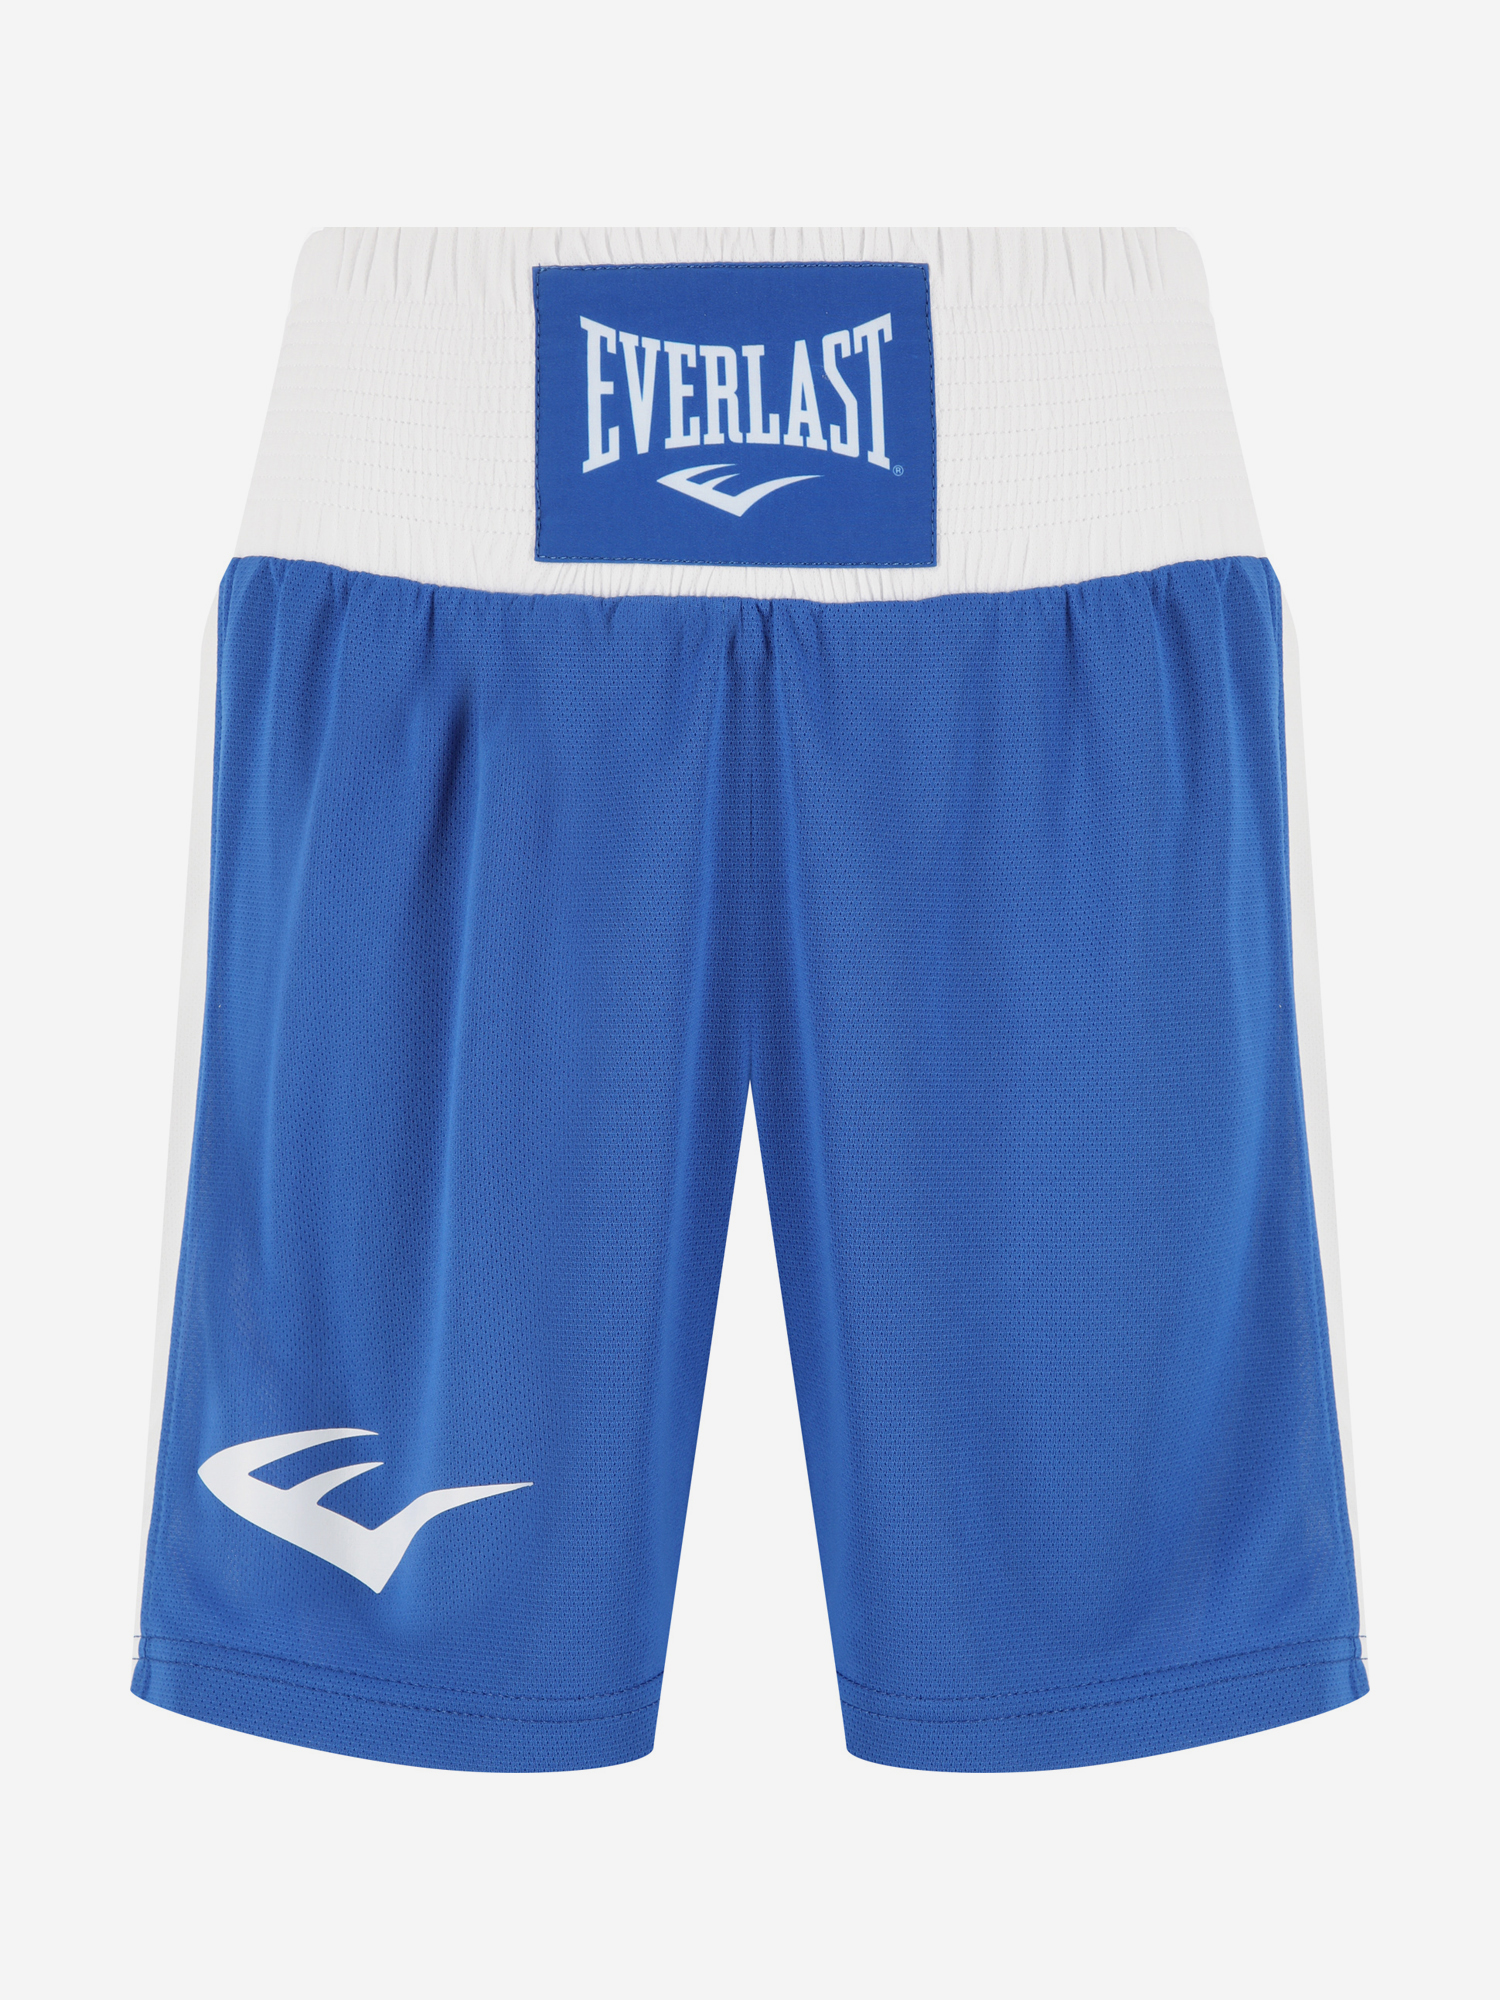 Шорты для бокса Everlast Shorts Elite, Синий шорты для бокса everlast shorts elite синий